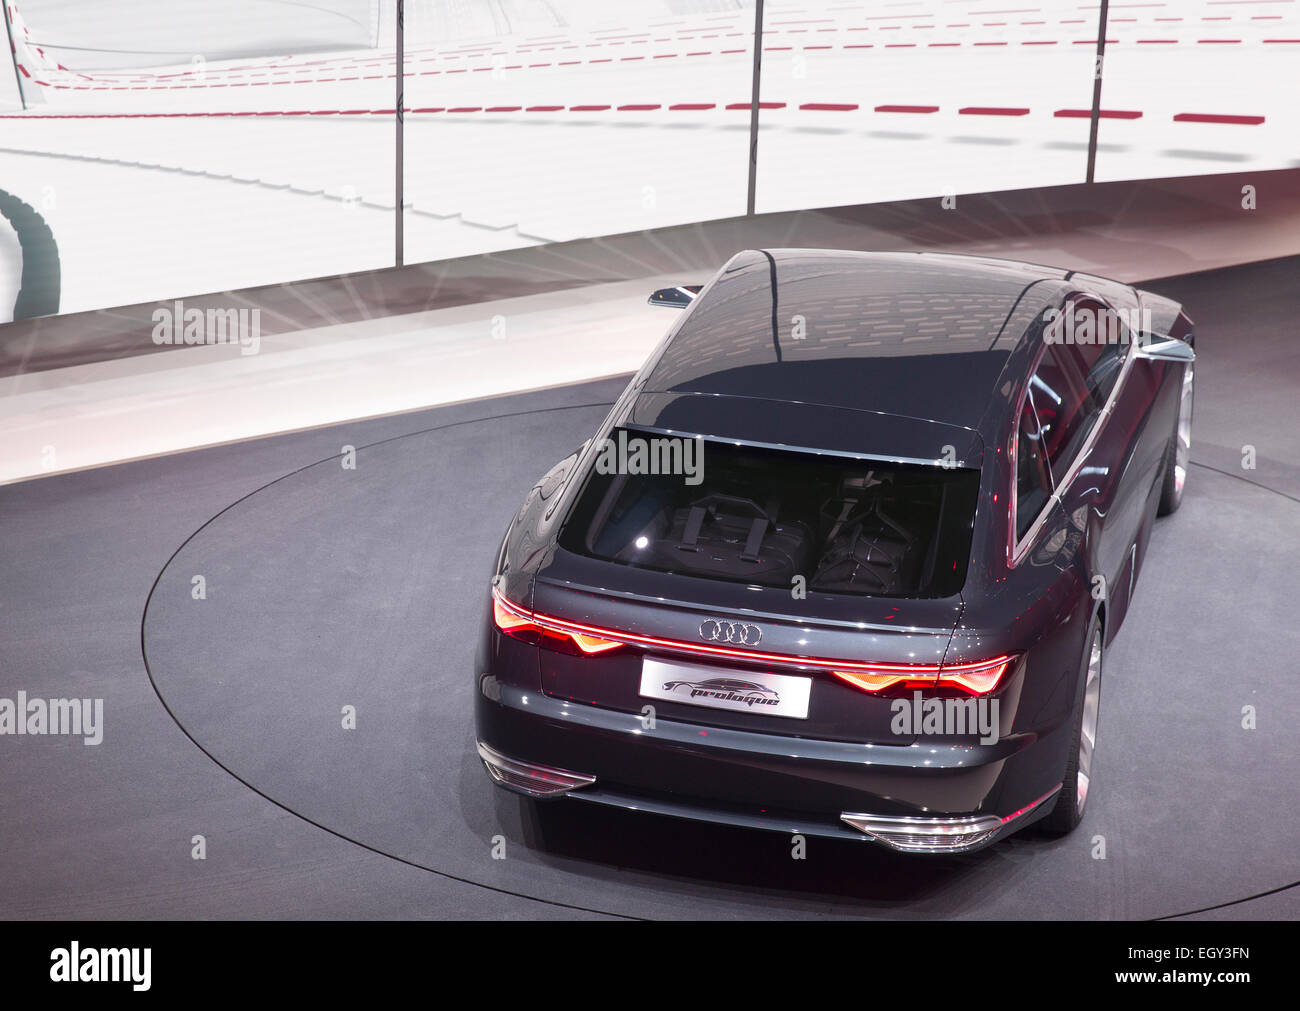 Gruppo VW notte, Audi koncept auto prologo Foto Stock